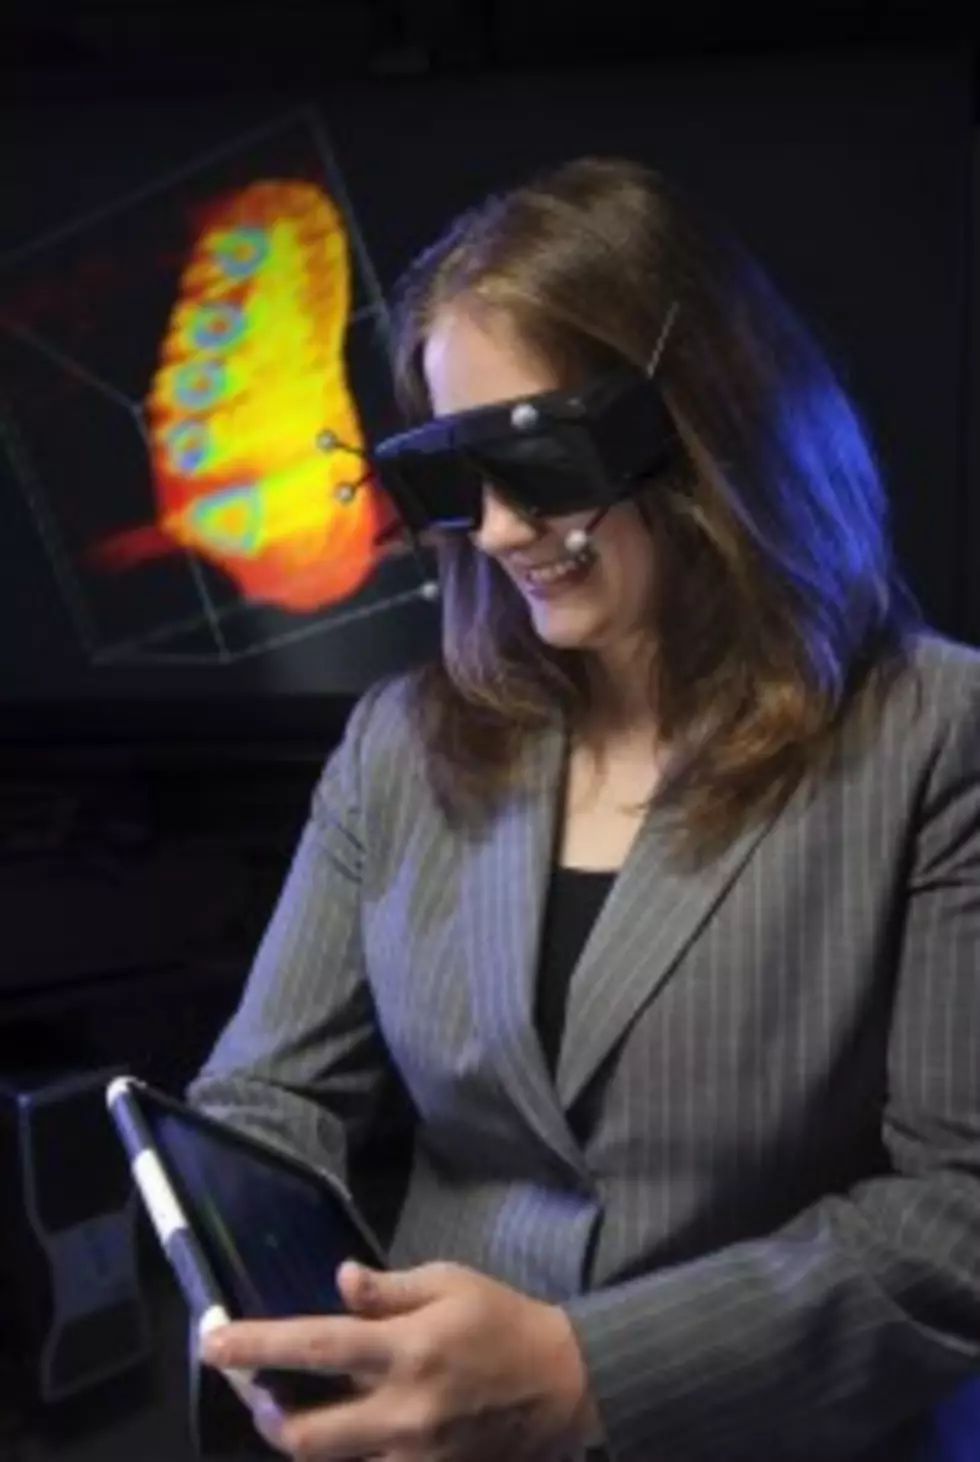 UW Professor Helps Scientists Analyze Their Research in 3-D